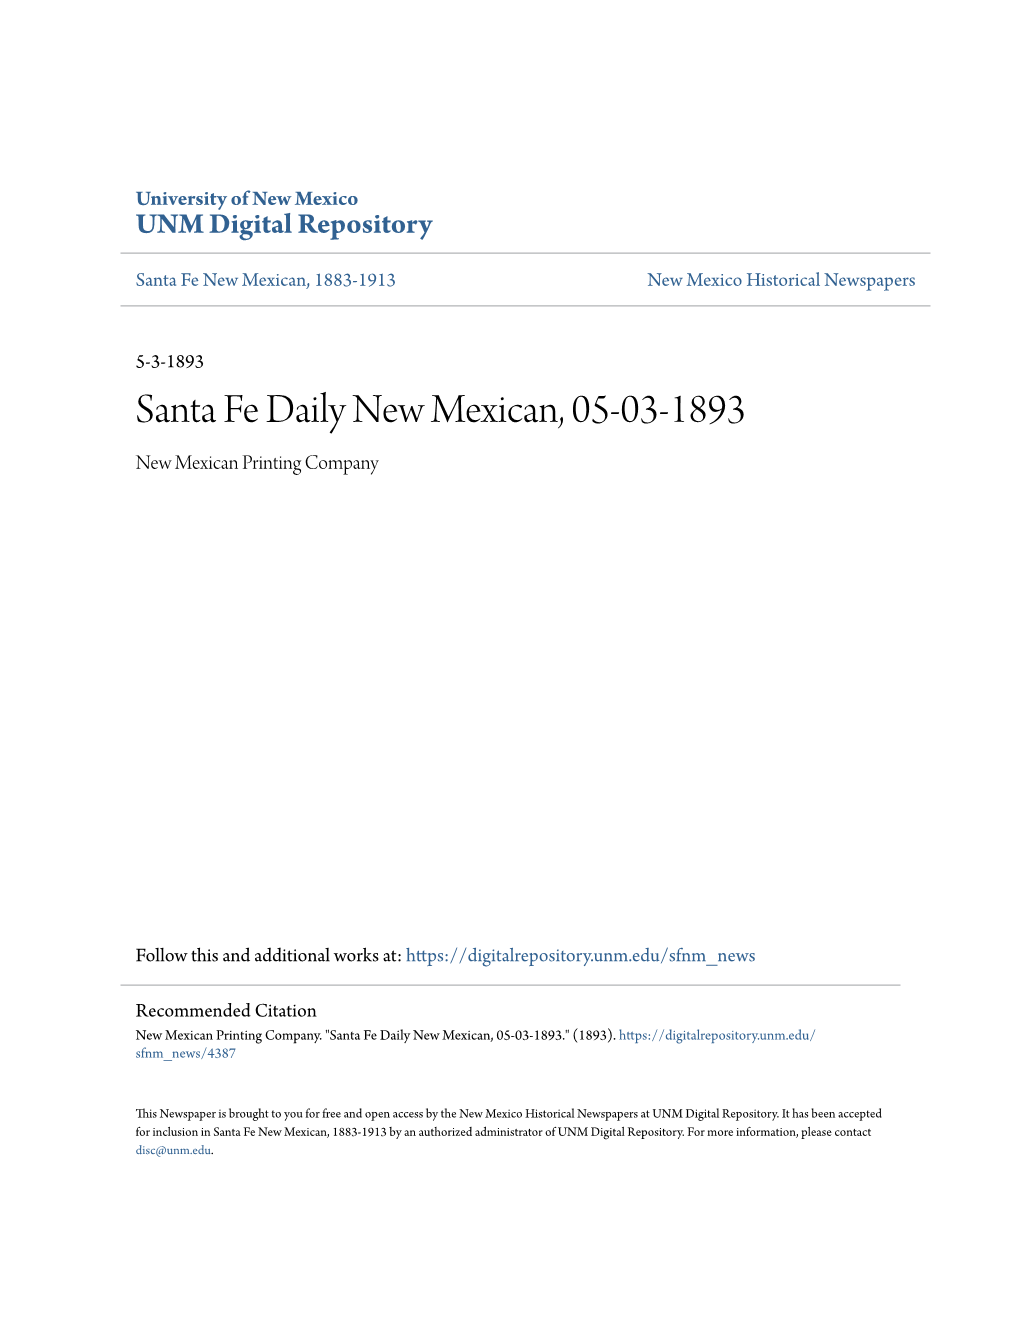 Santa Fe Daily New Mexican, 05-03-1893 New Mexican Printing Company